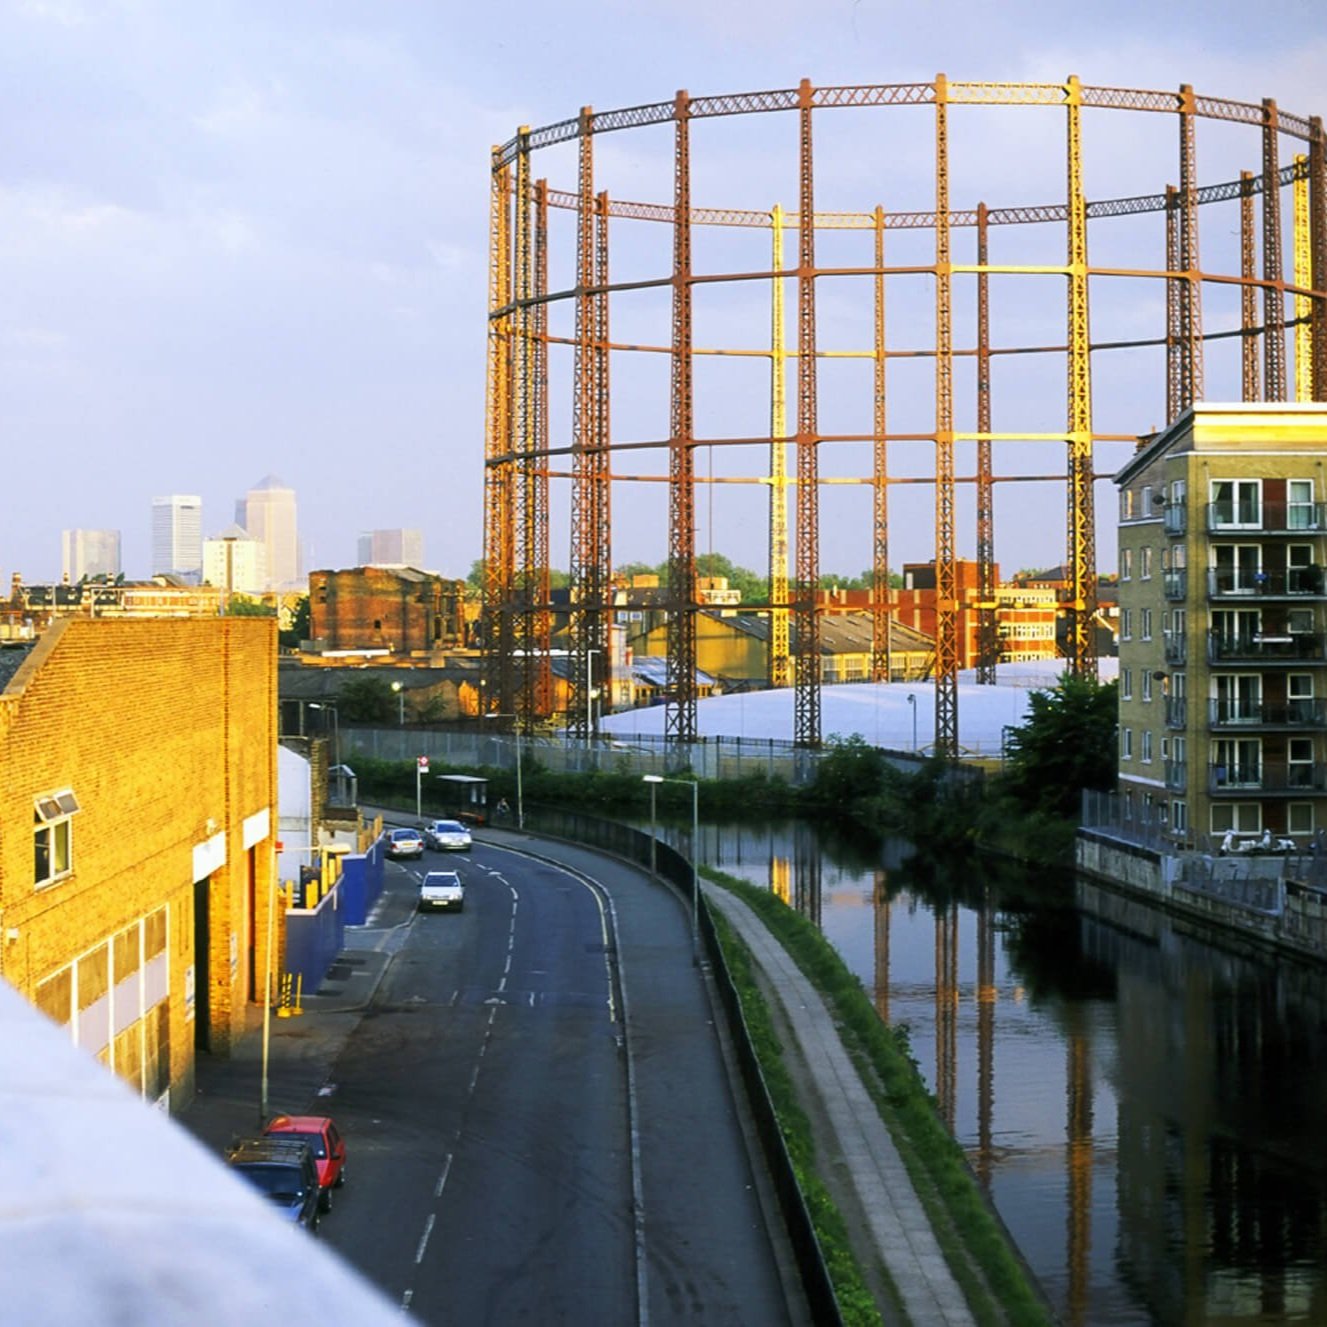 east-london-loft-rooftop-canal-view.jpg